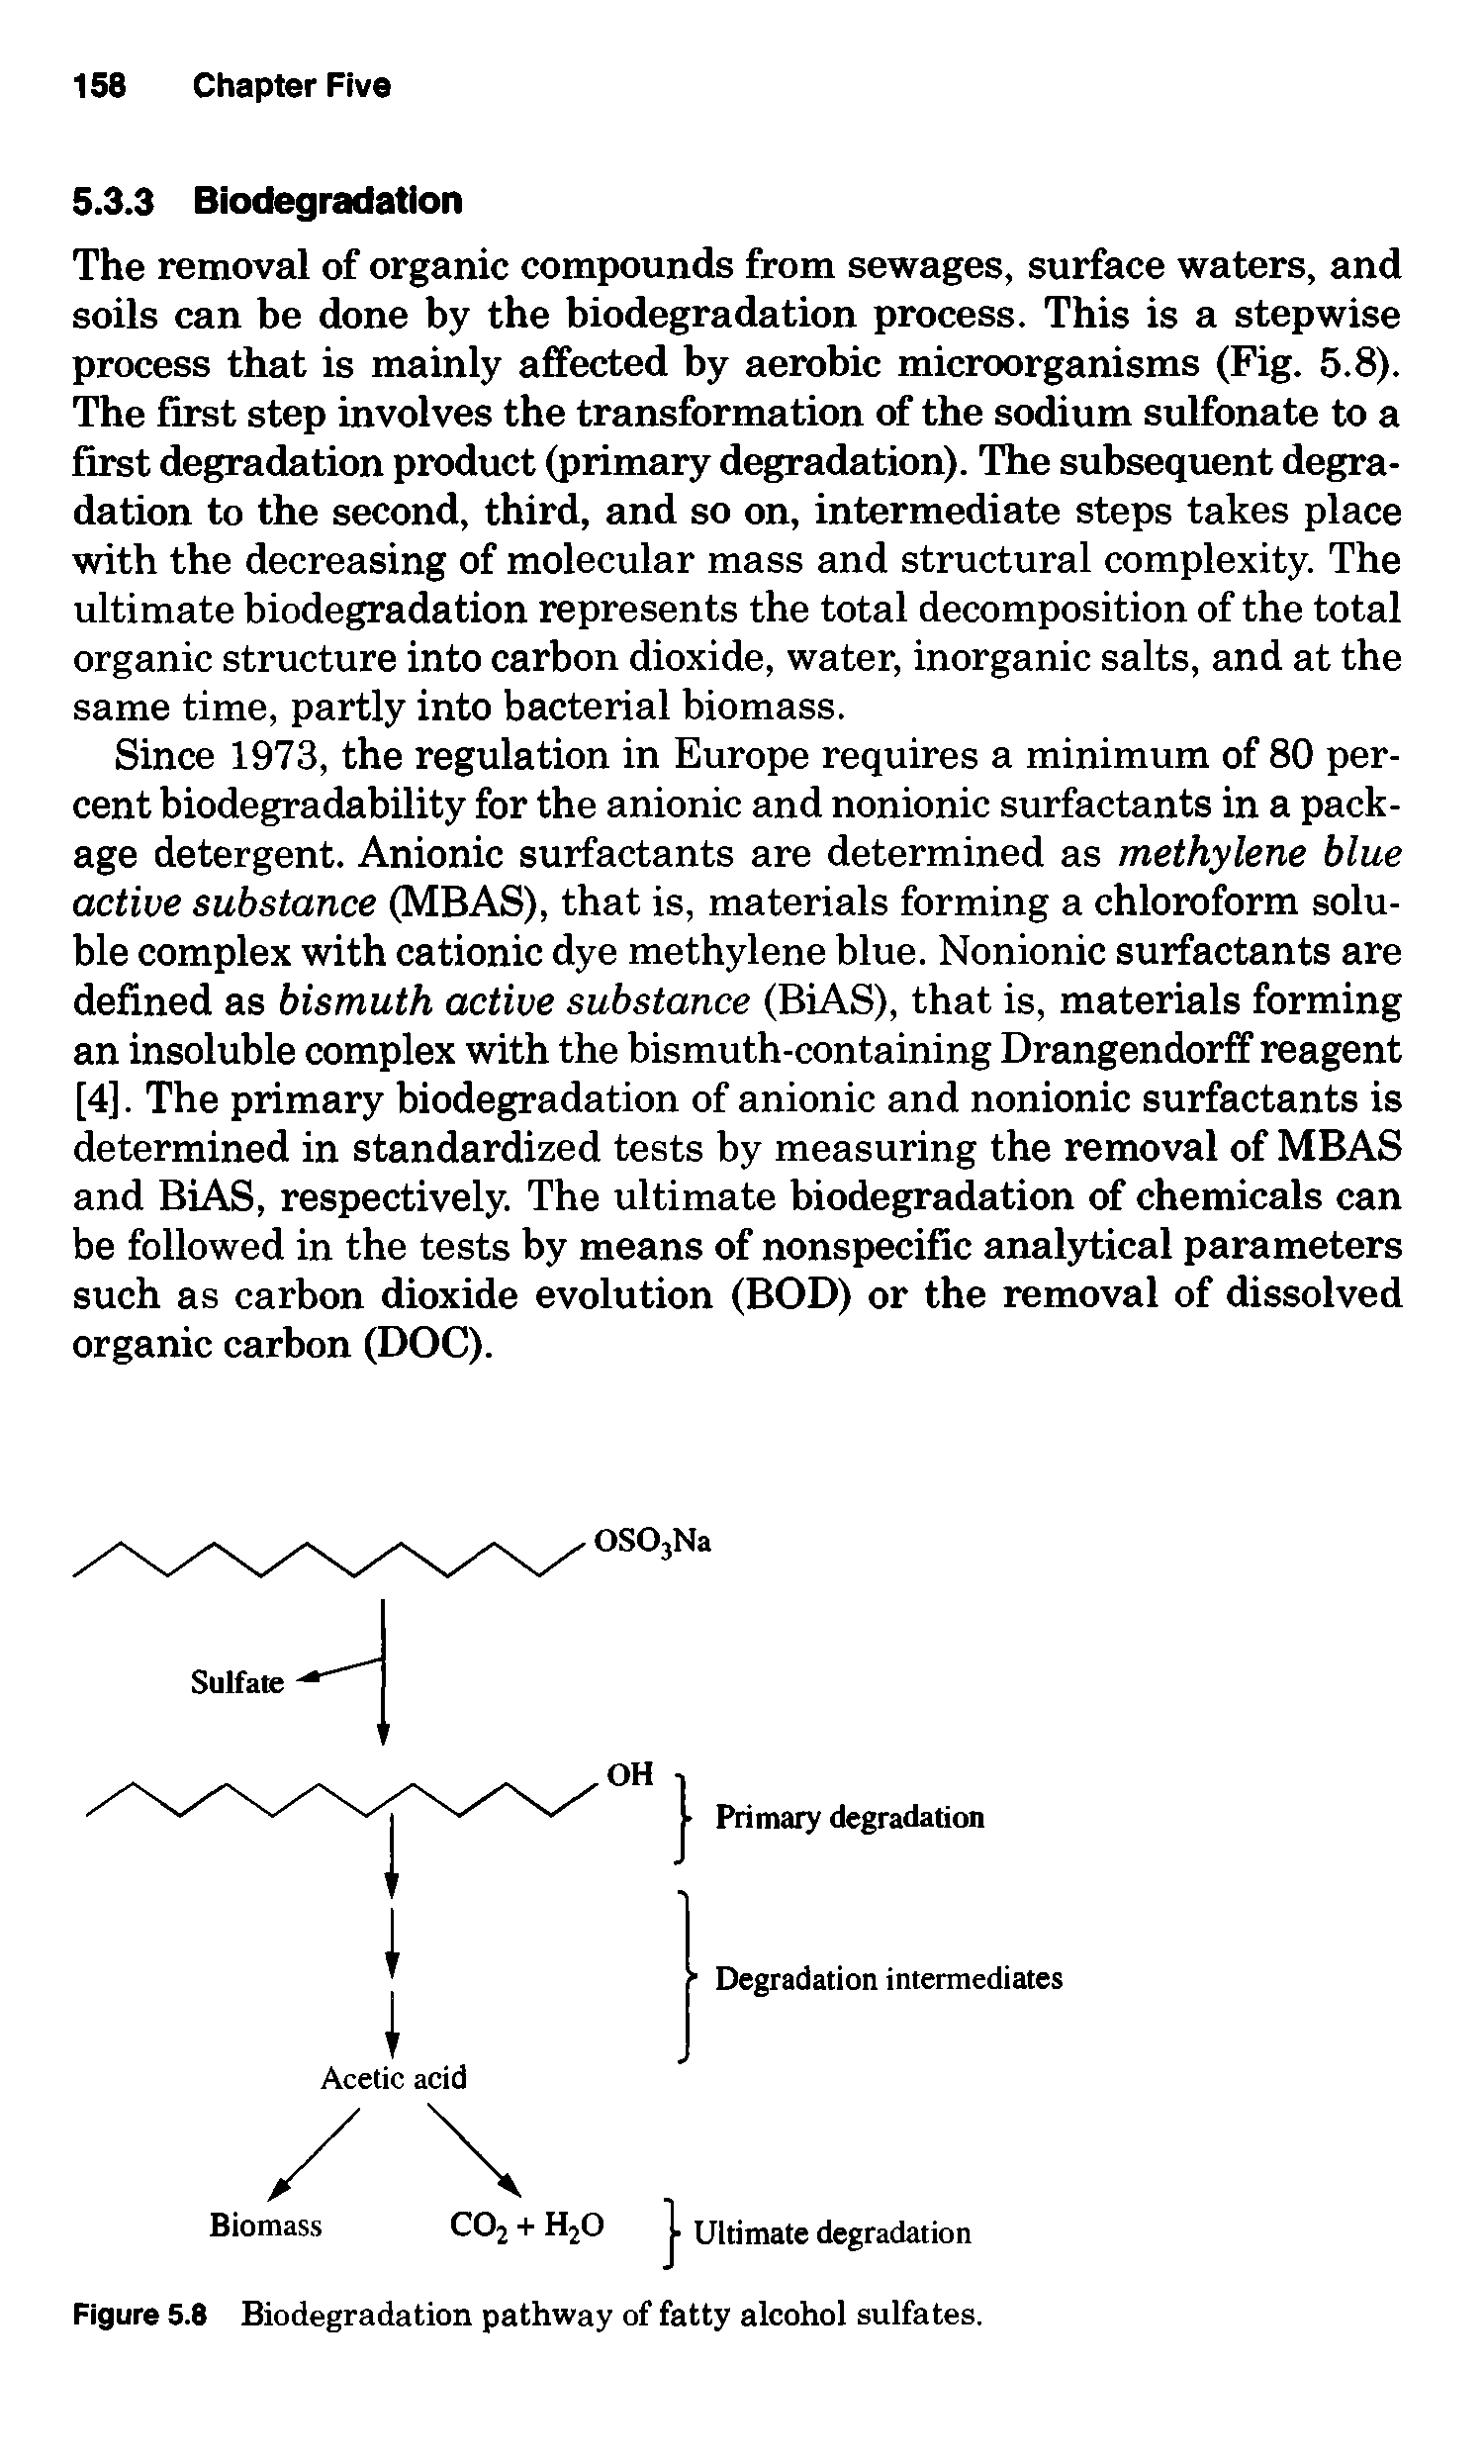 Figure 5.8 Biodegradation pathway of fatty alcohol sulfates.